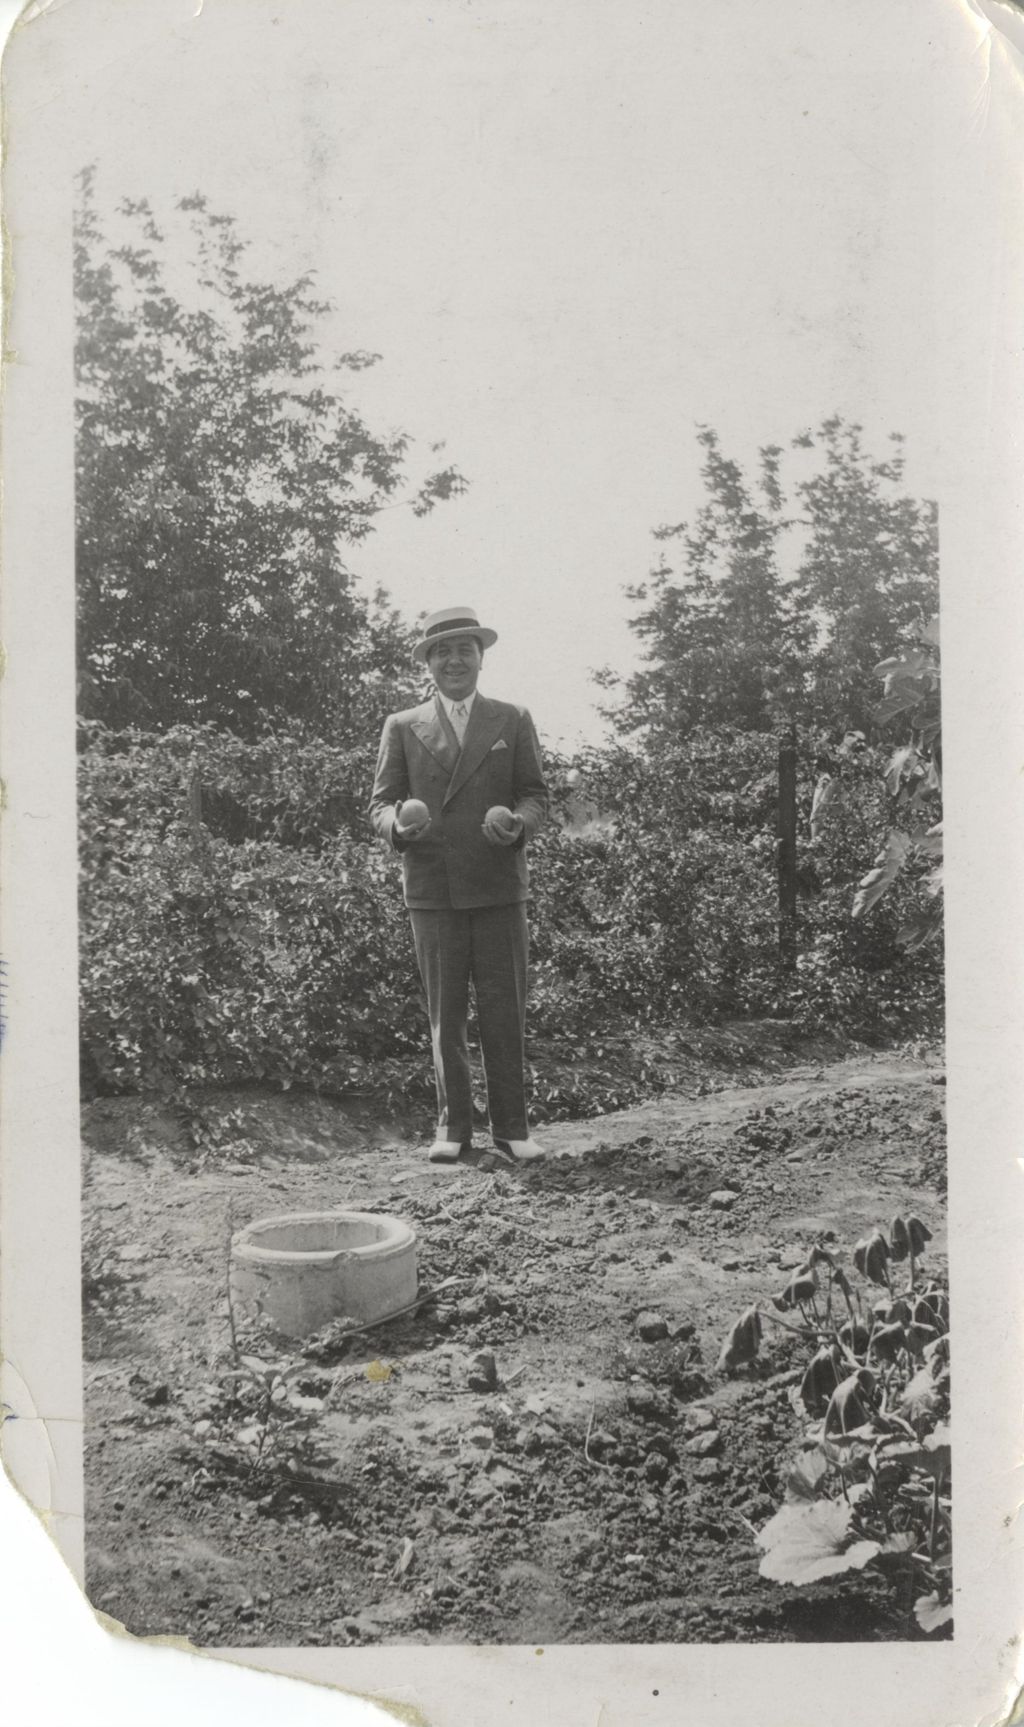 Miniature of Richard J. Daley standing outside